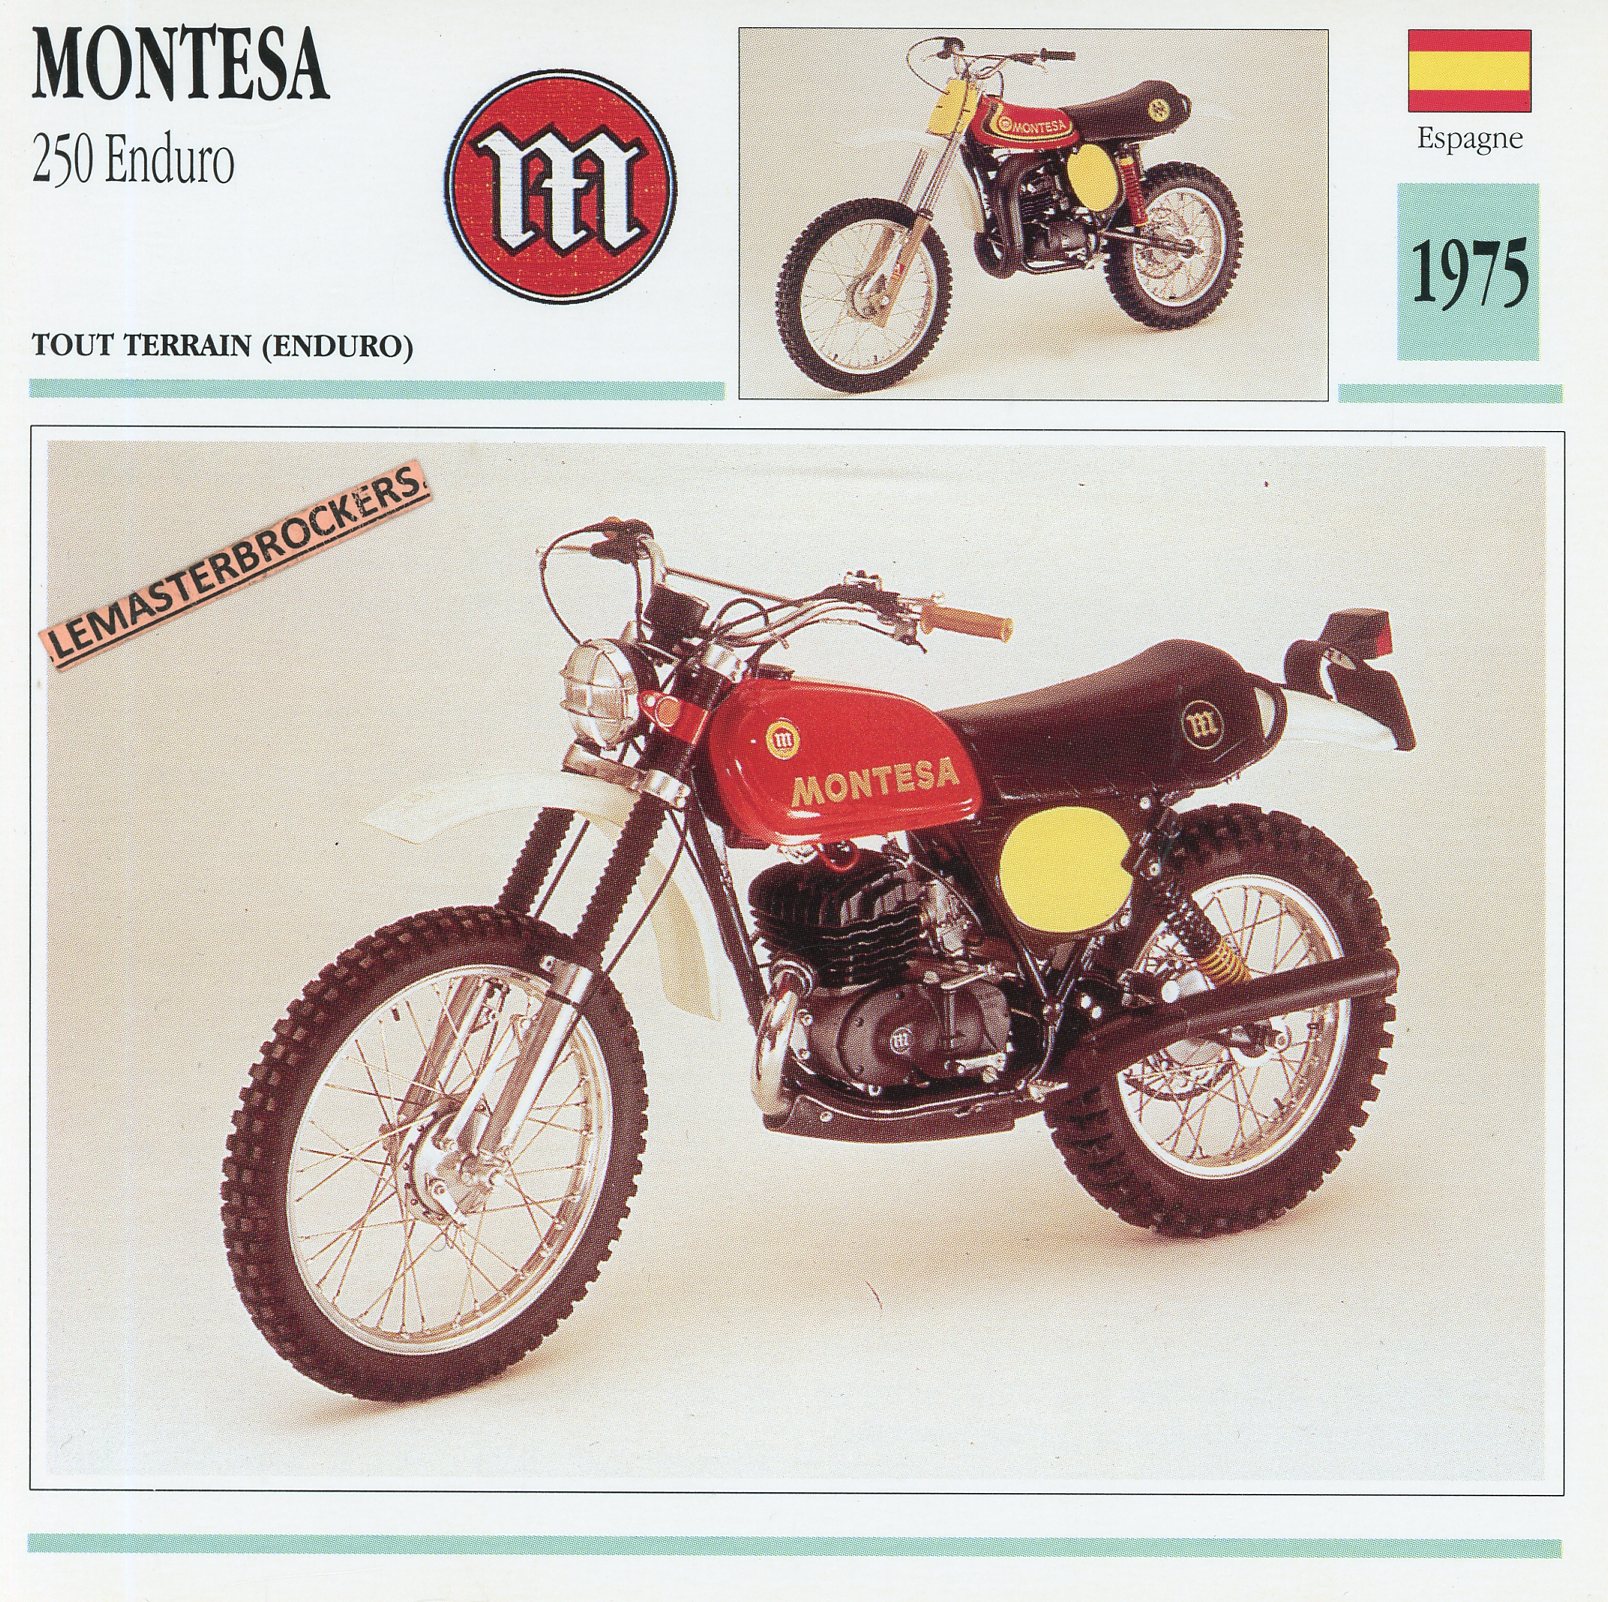 MONTESA-250-ENDURO-1975-CARTE-FICHE-MOTO-LEMASTERBROCKERS